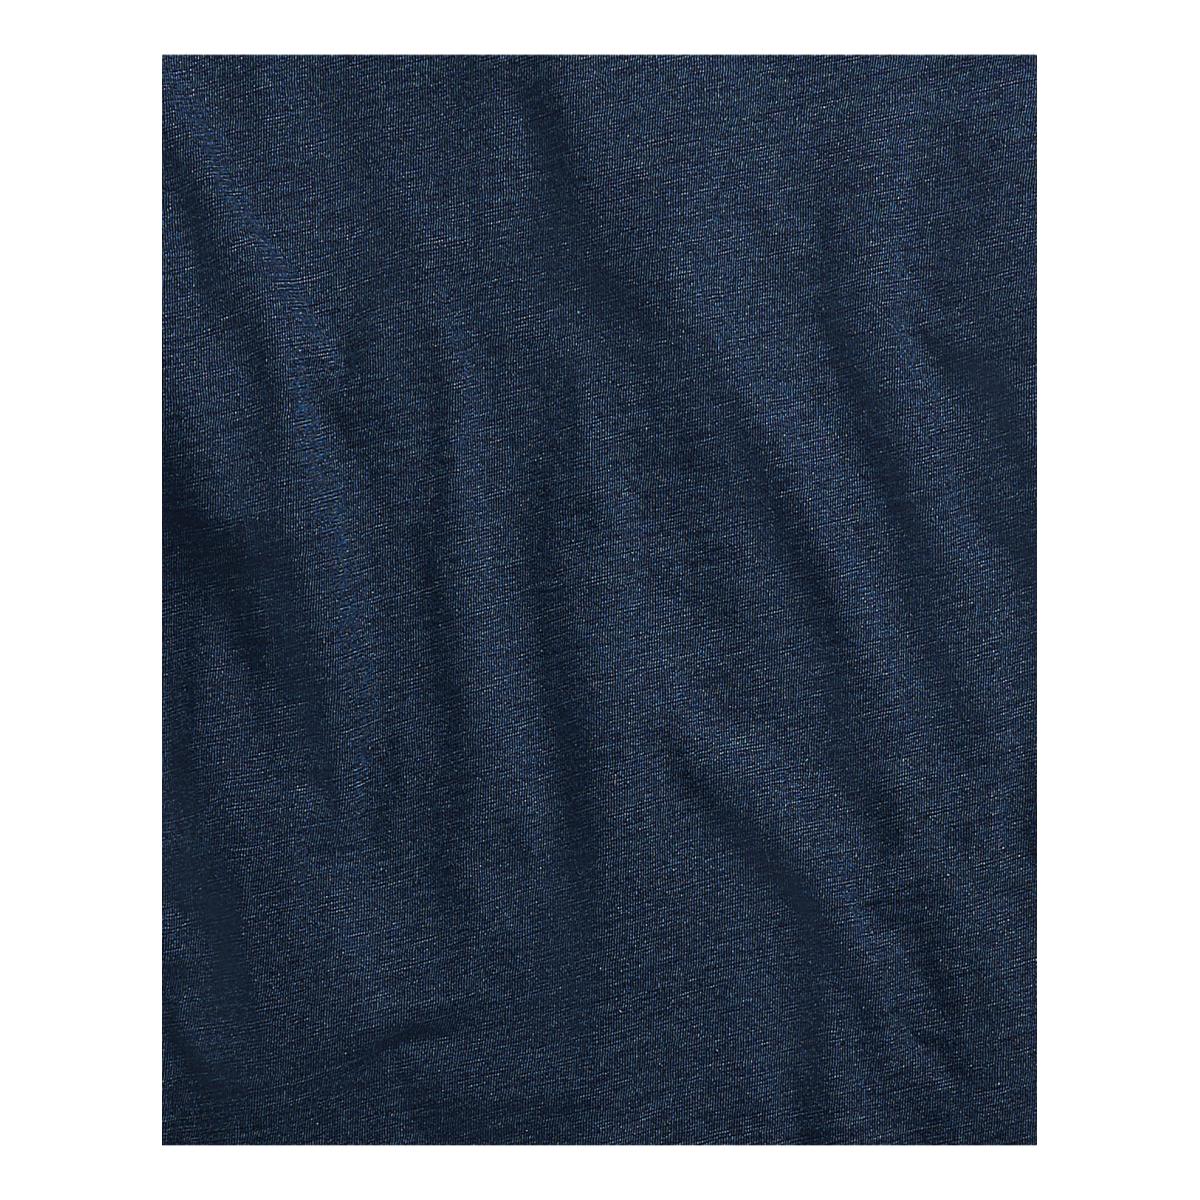 Indigo Jersey Long-Sleeve T-Shirt Rinsed Blue Indigo - T